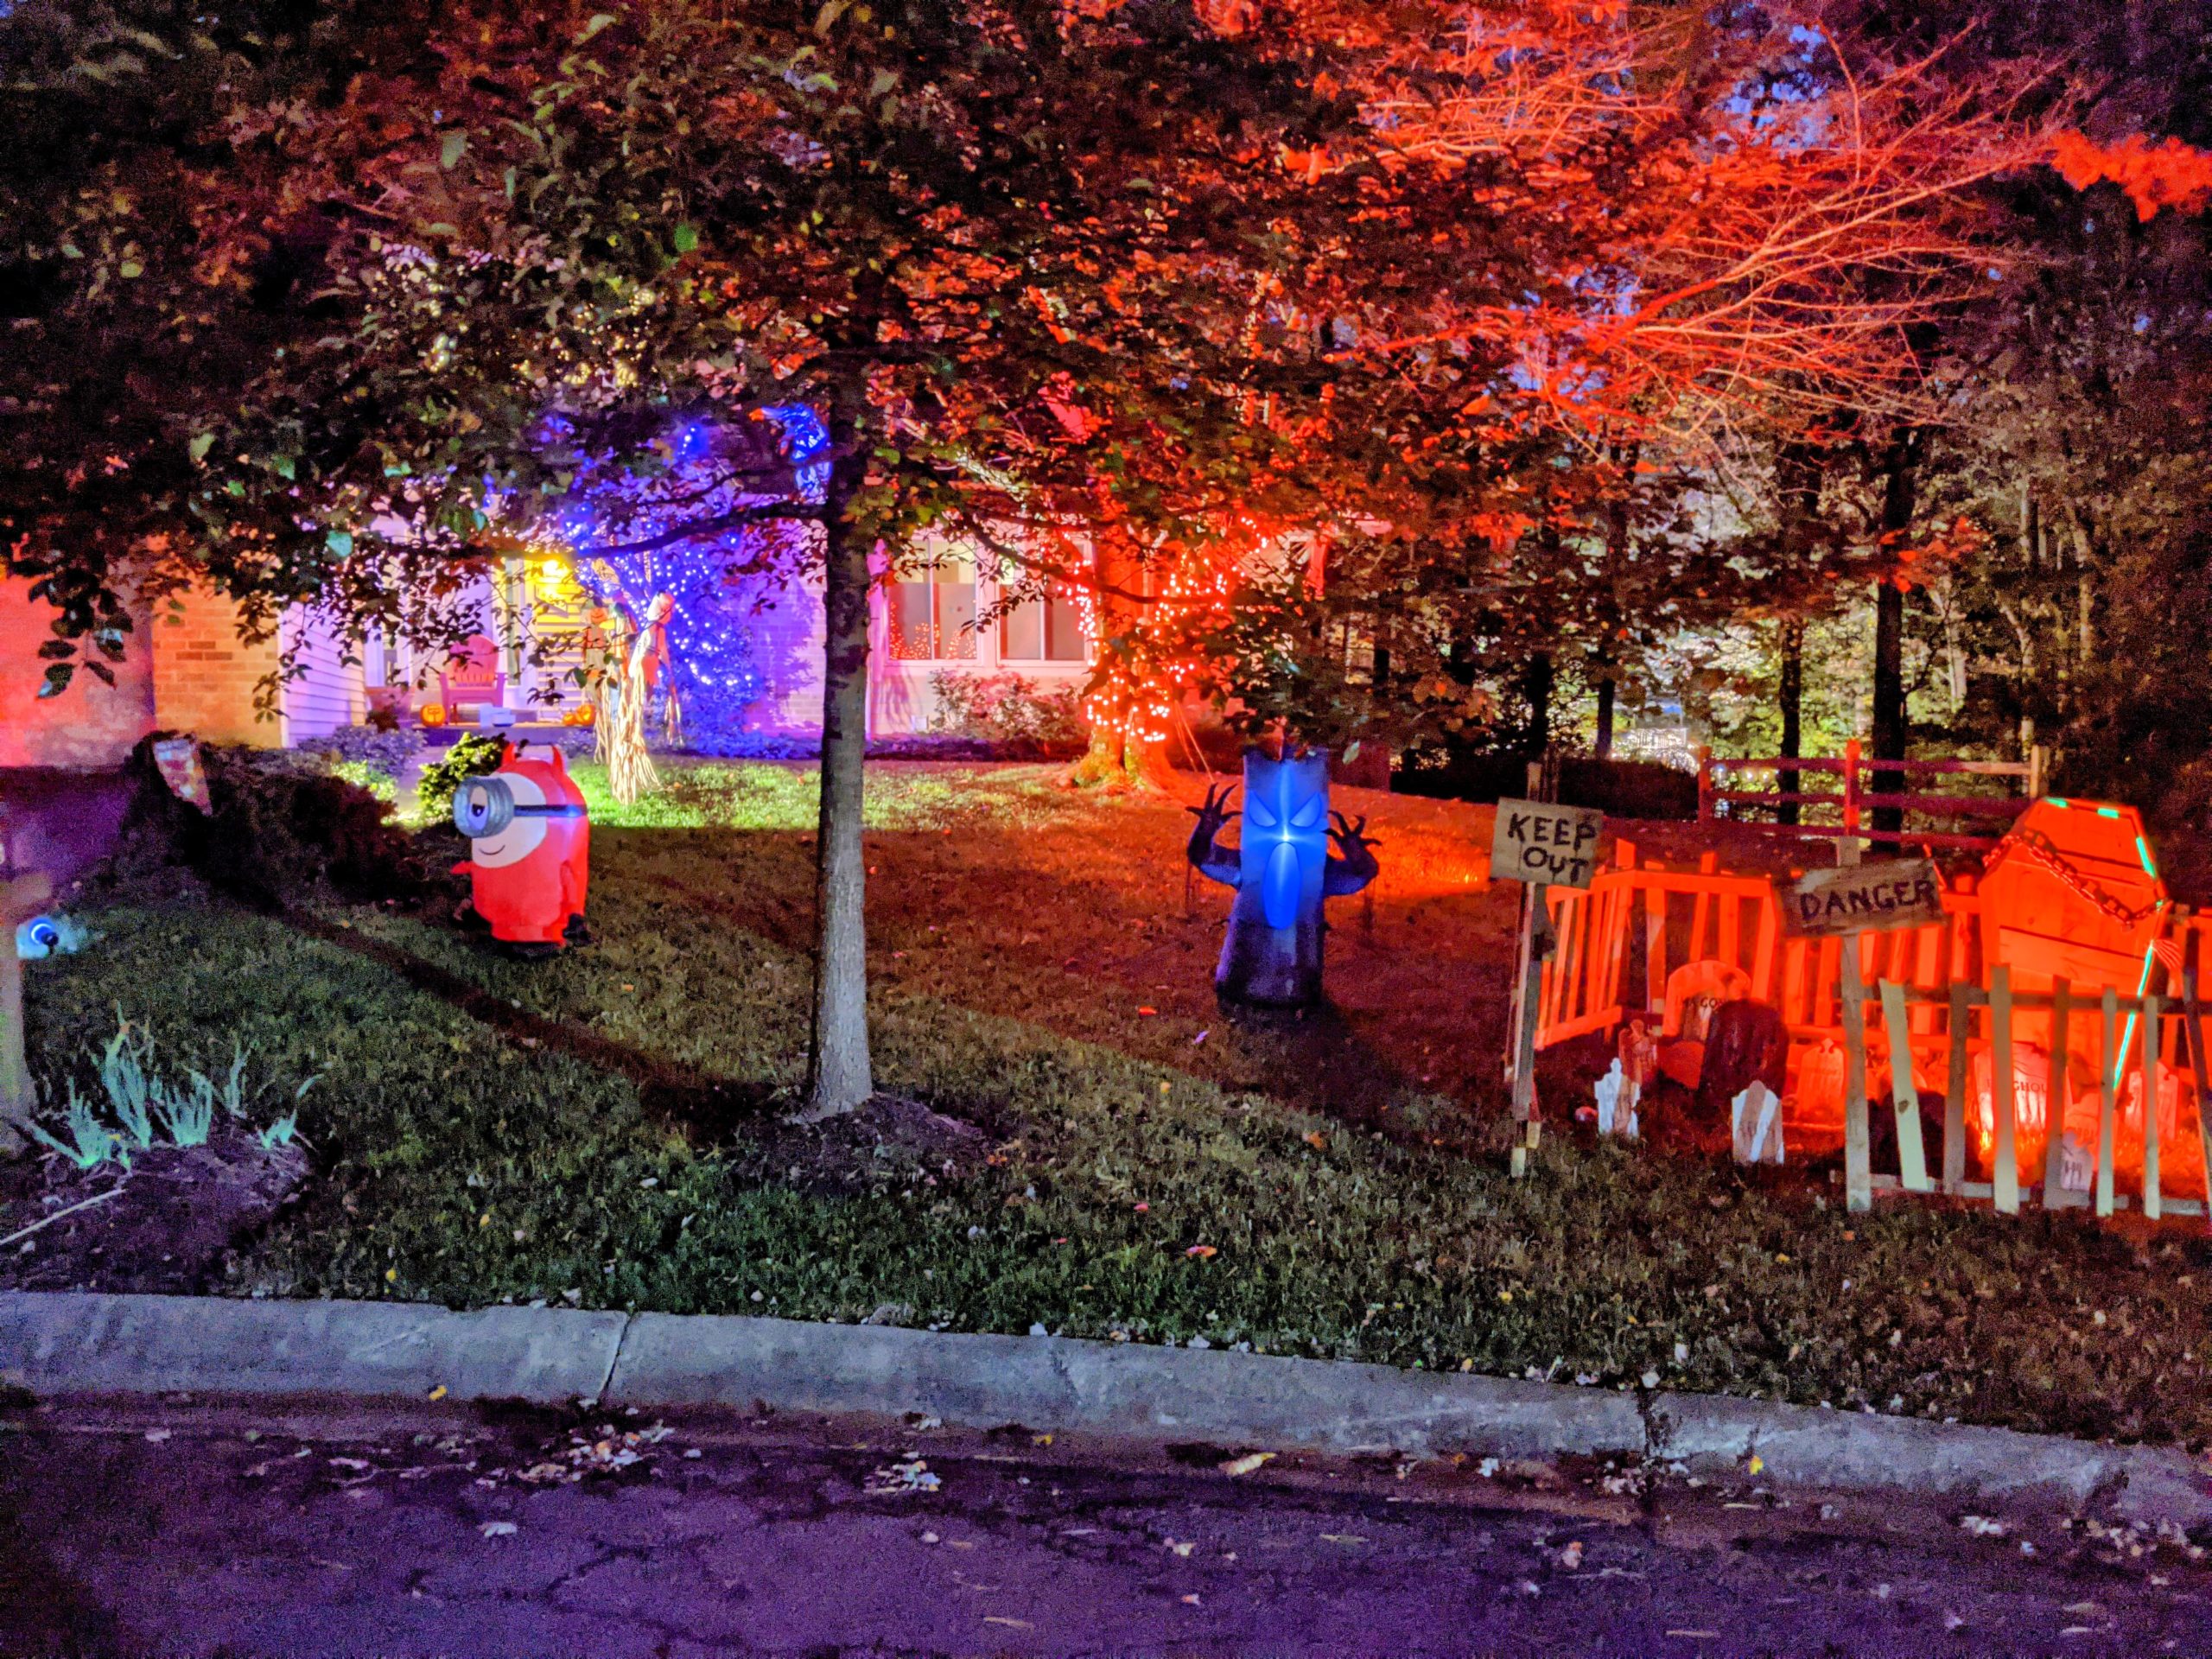 Flints Grove Halloween Decoration Contest Results